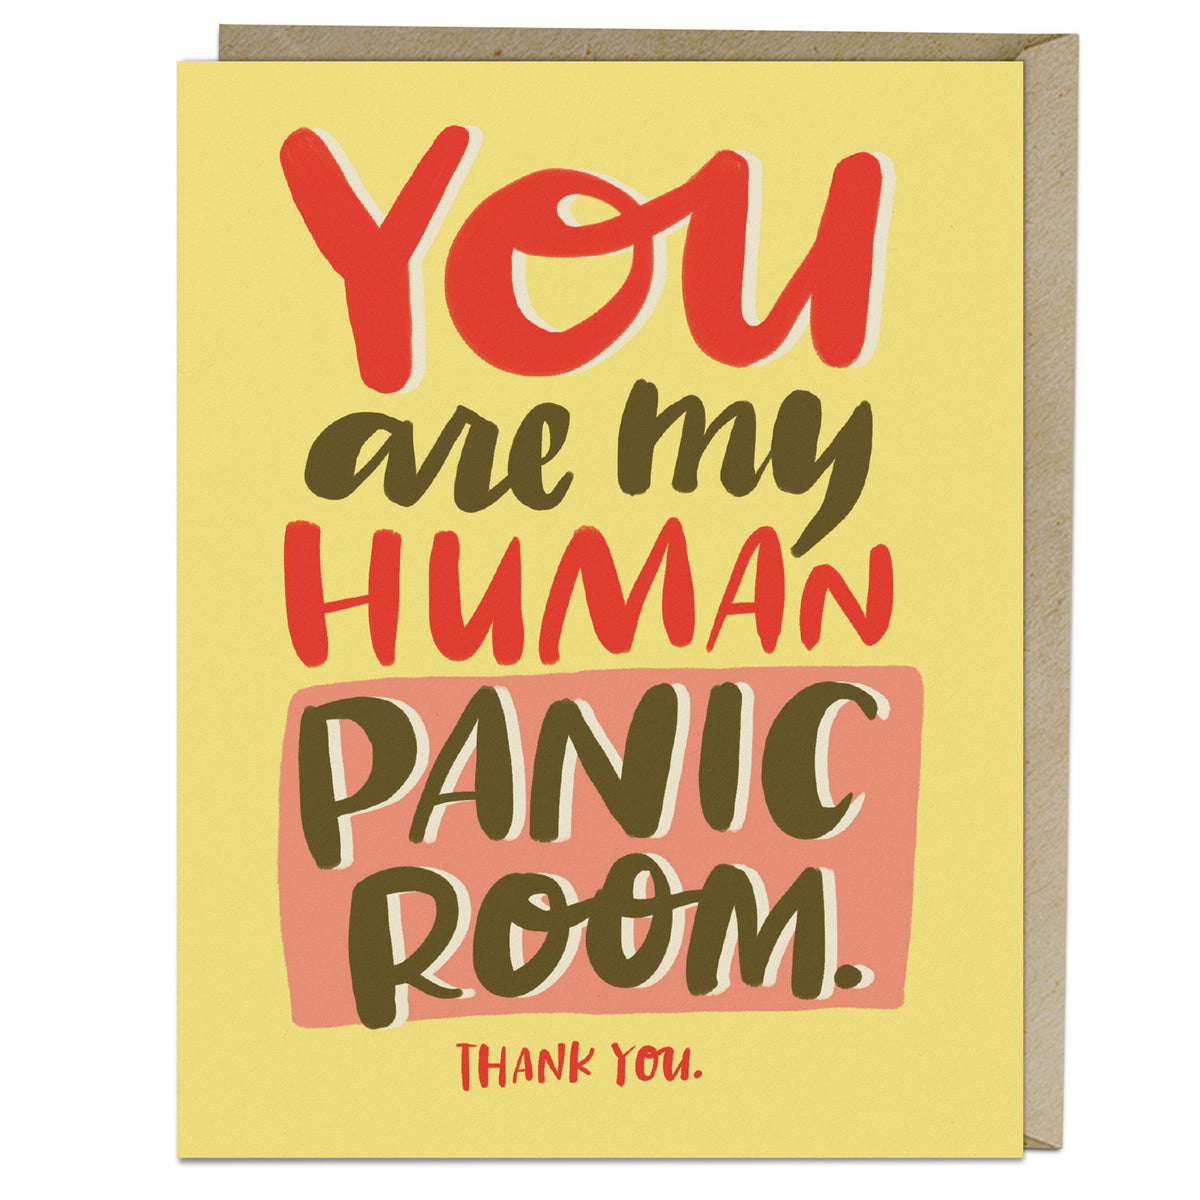 Human Panic Room Card